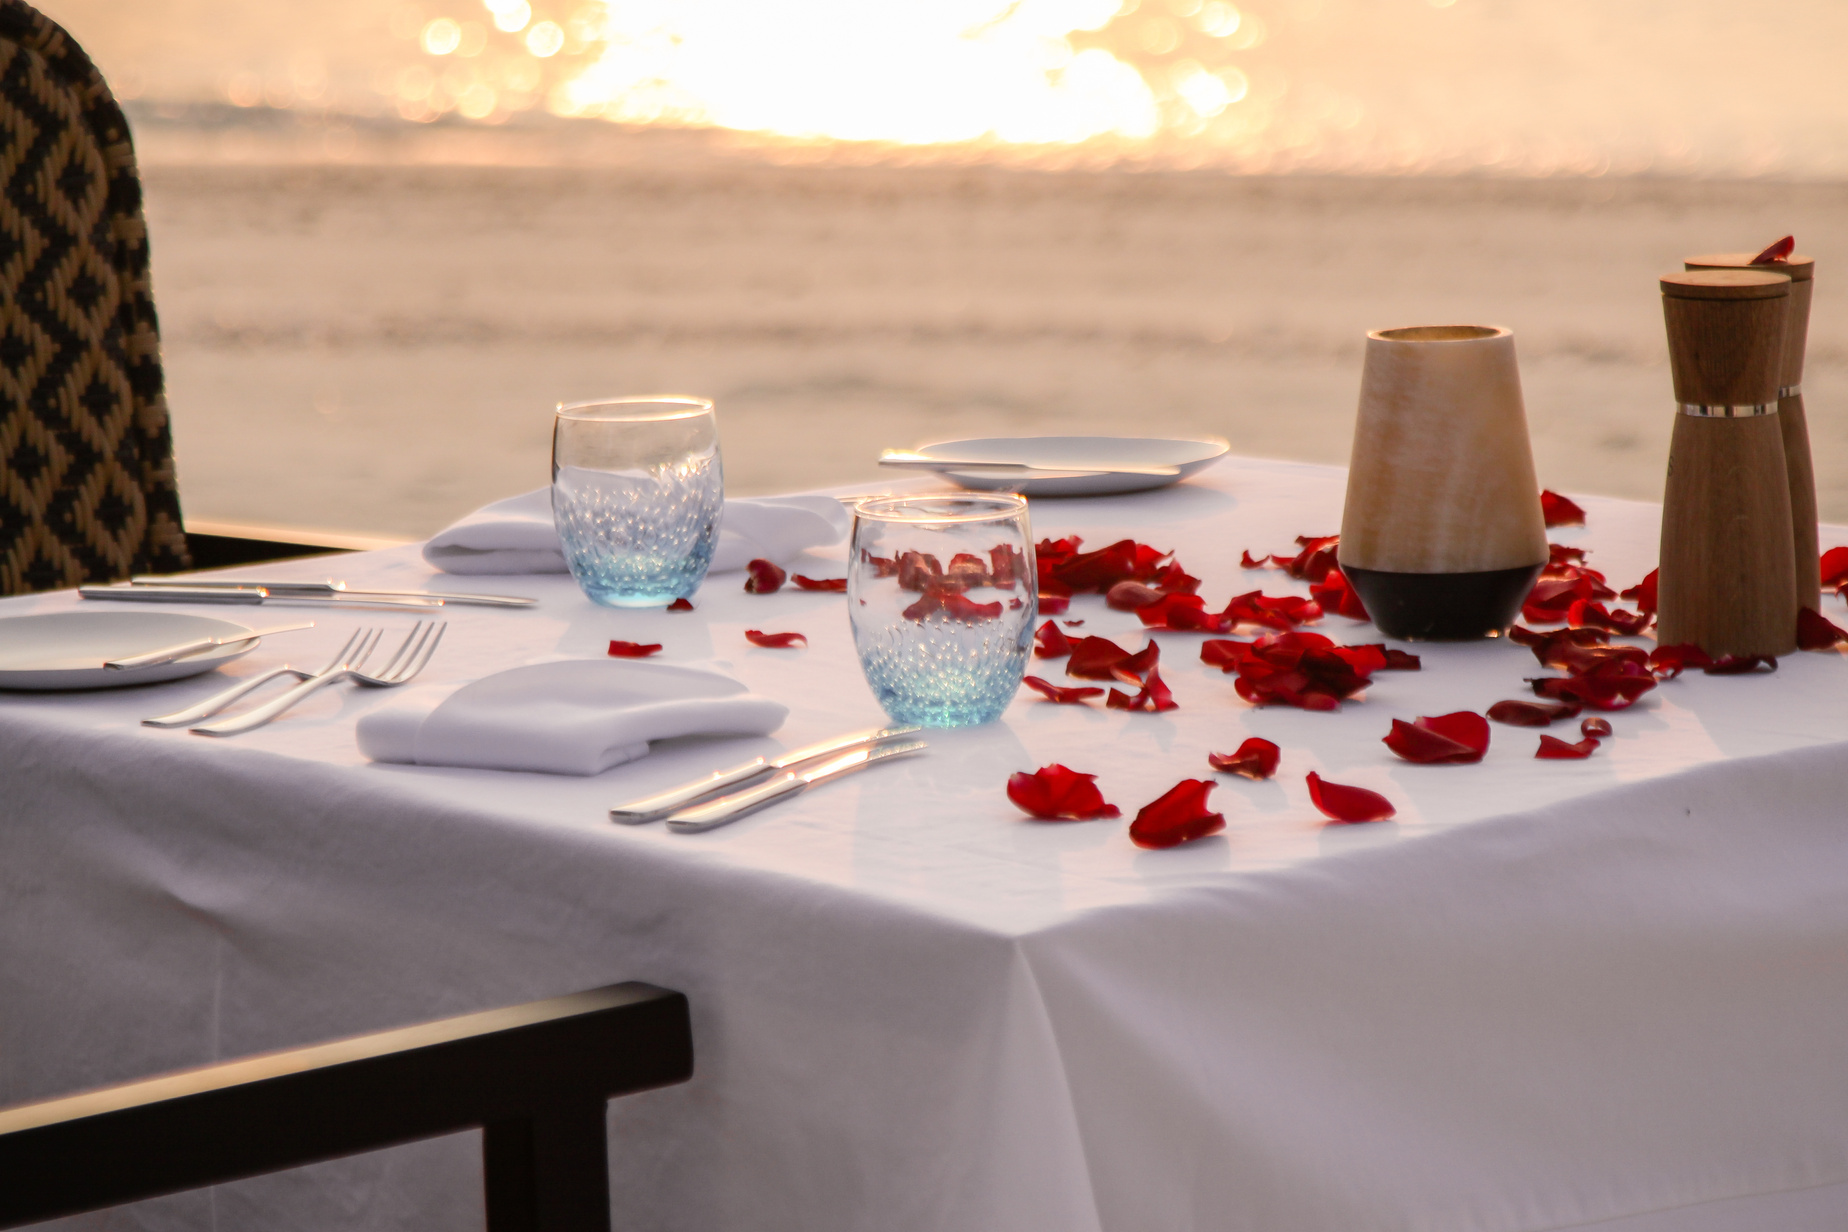 Romantic candle light dinner on the beach